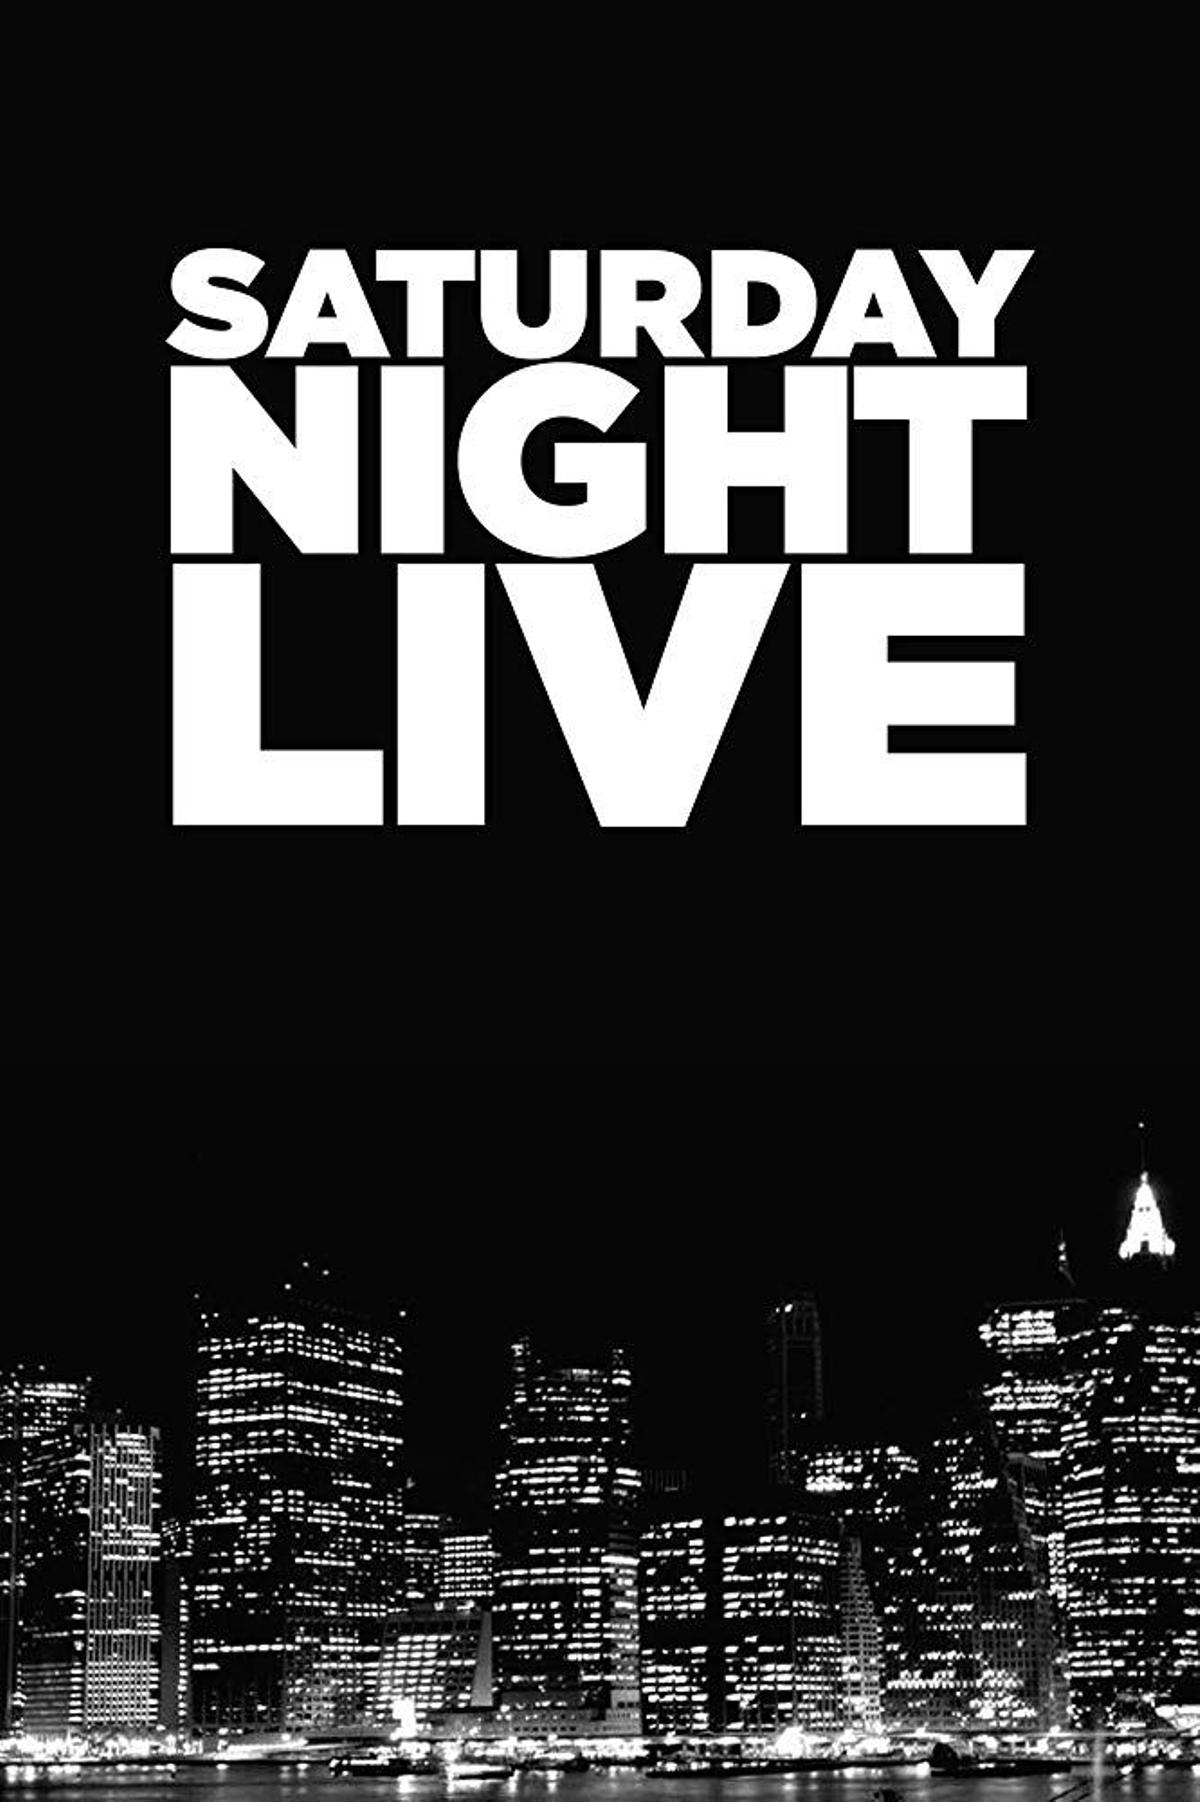 8. 'Saturday Nighy Live'